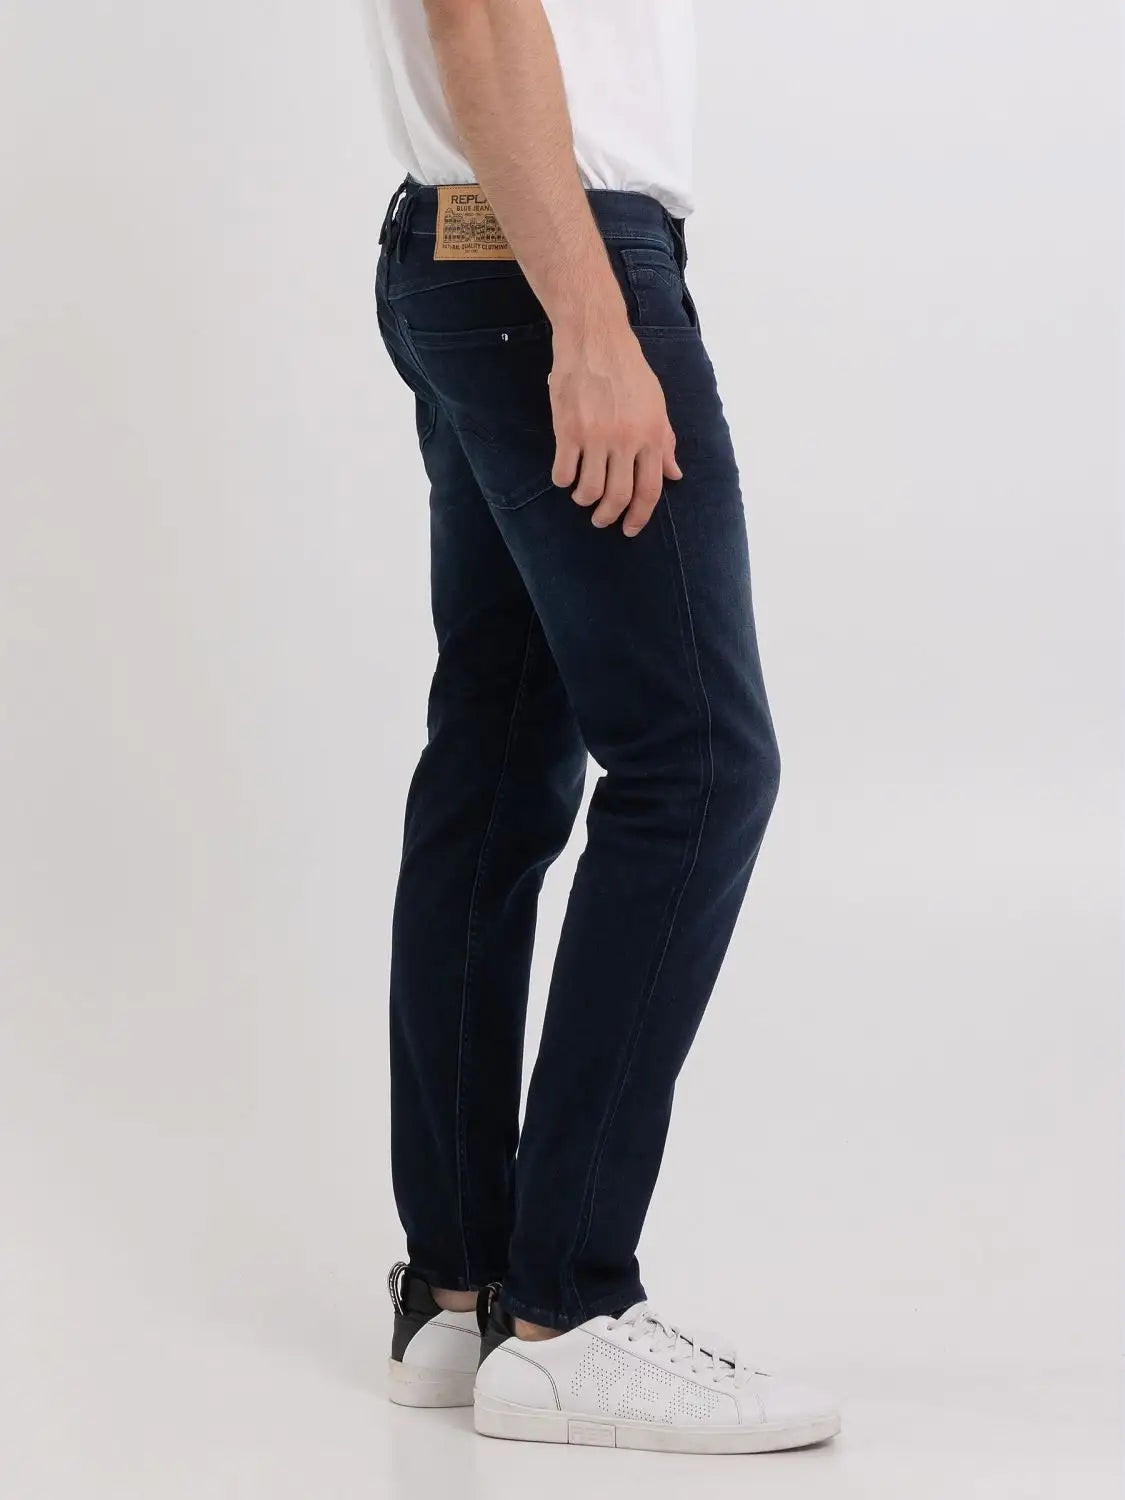 Replay Slim Fit Anbass Dark Indigo Jeans - M914Y .000.41A 300